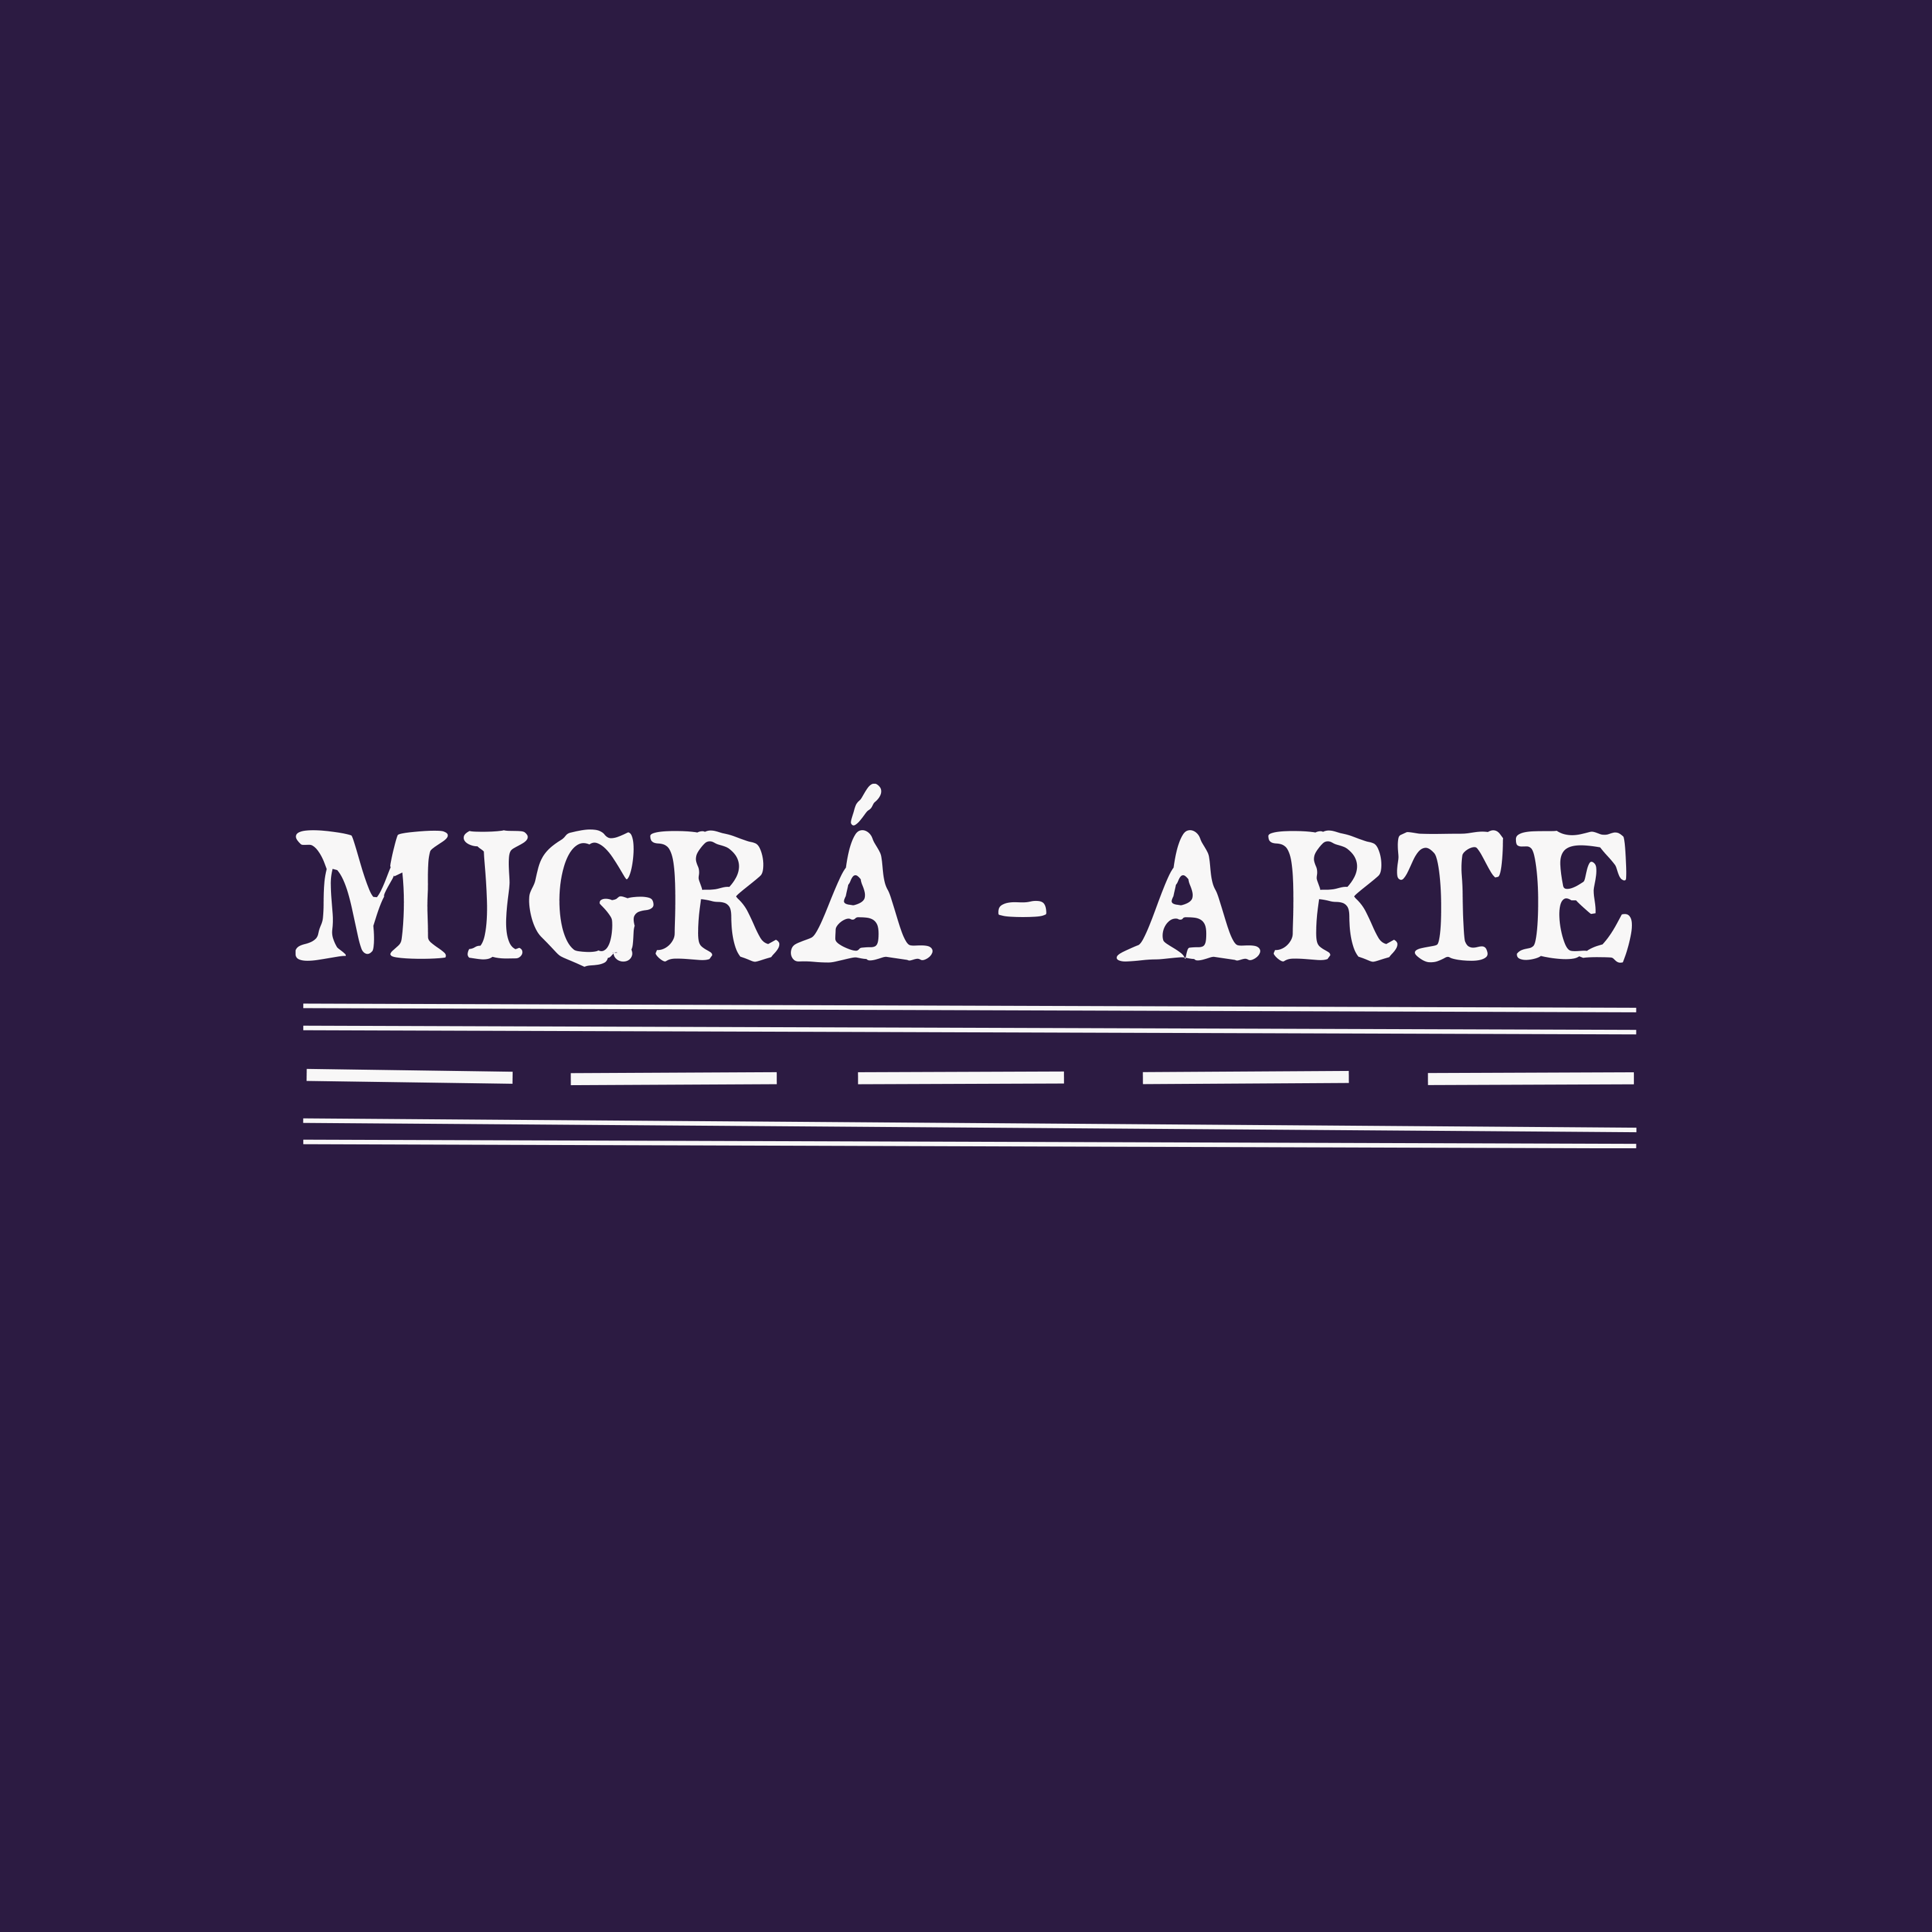 Migra Arte